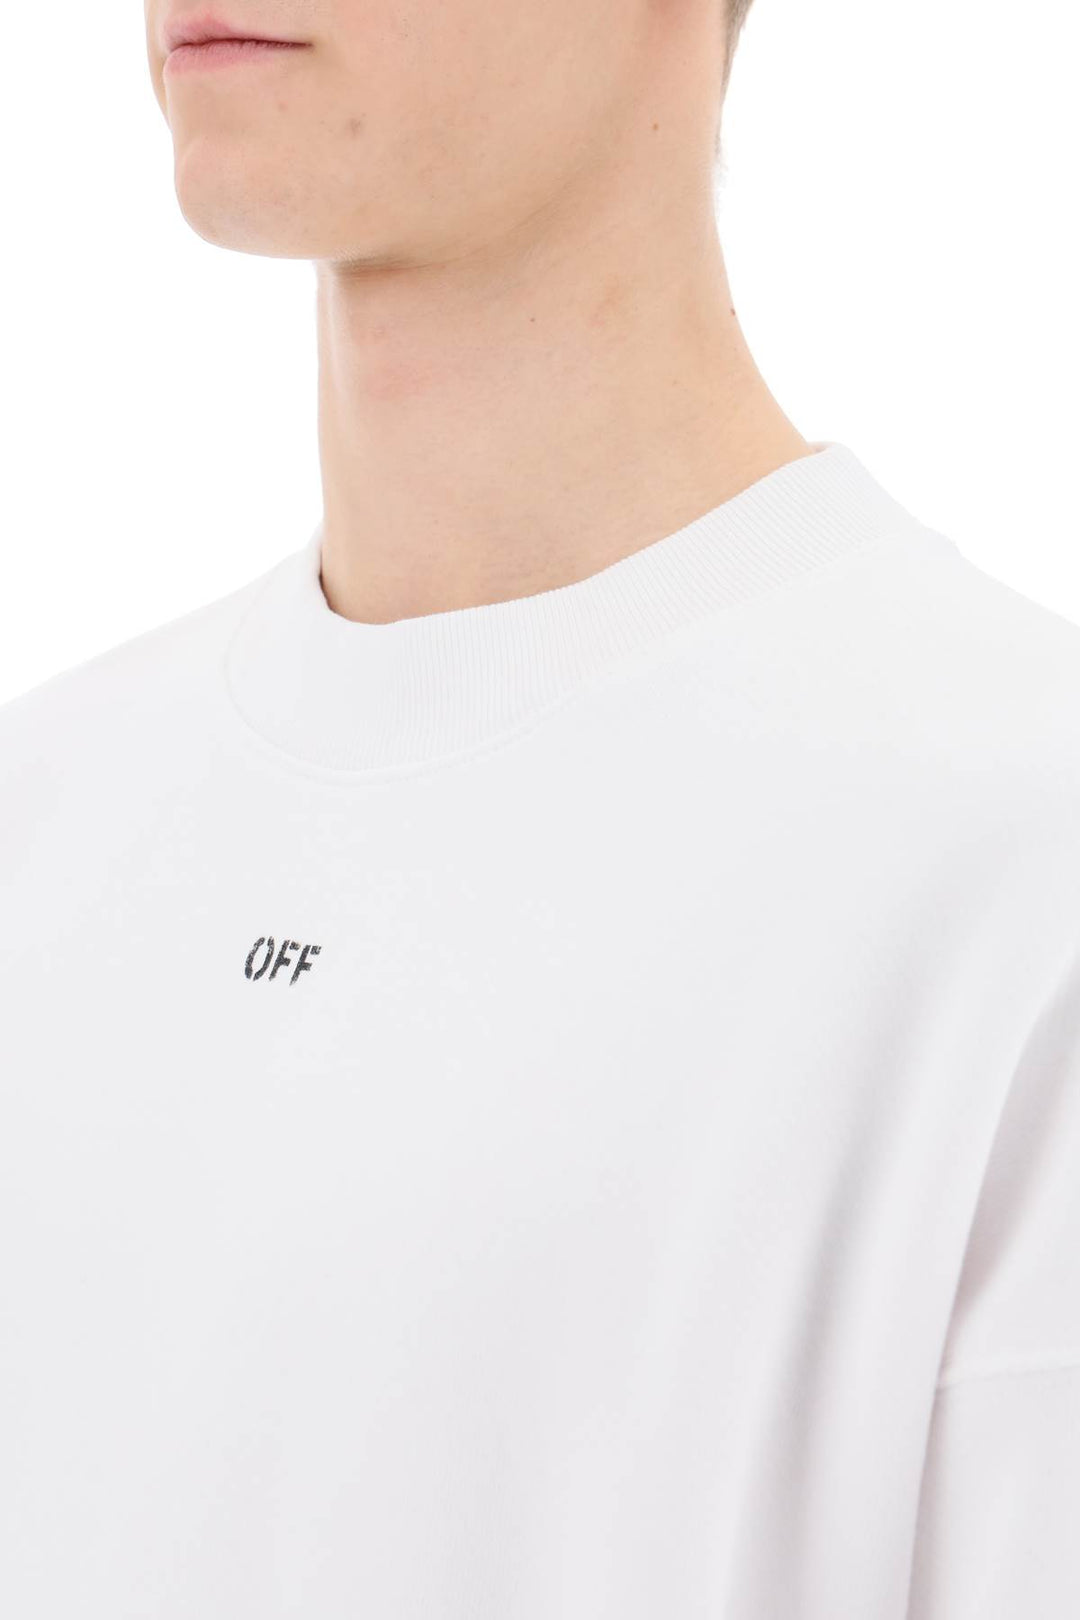 Off-white skate sweatshirt with off logo-3